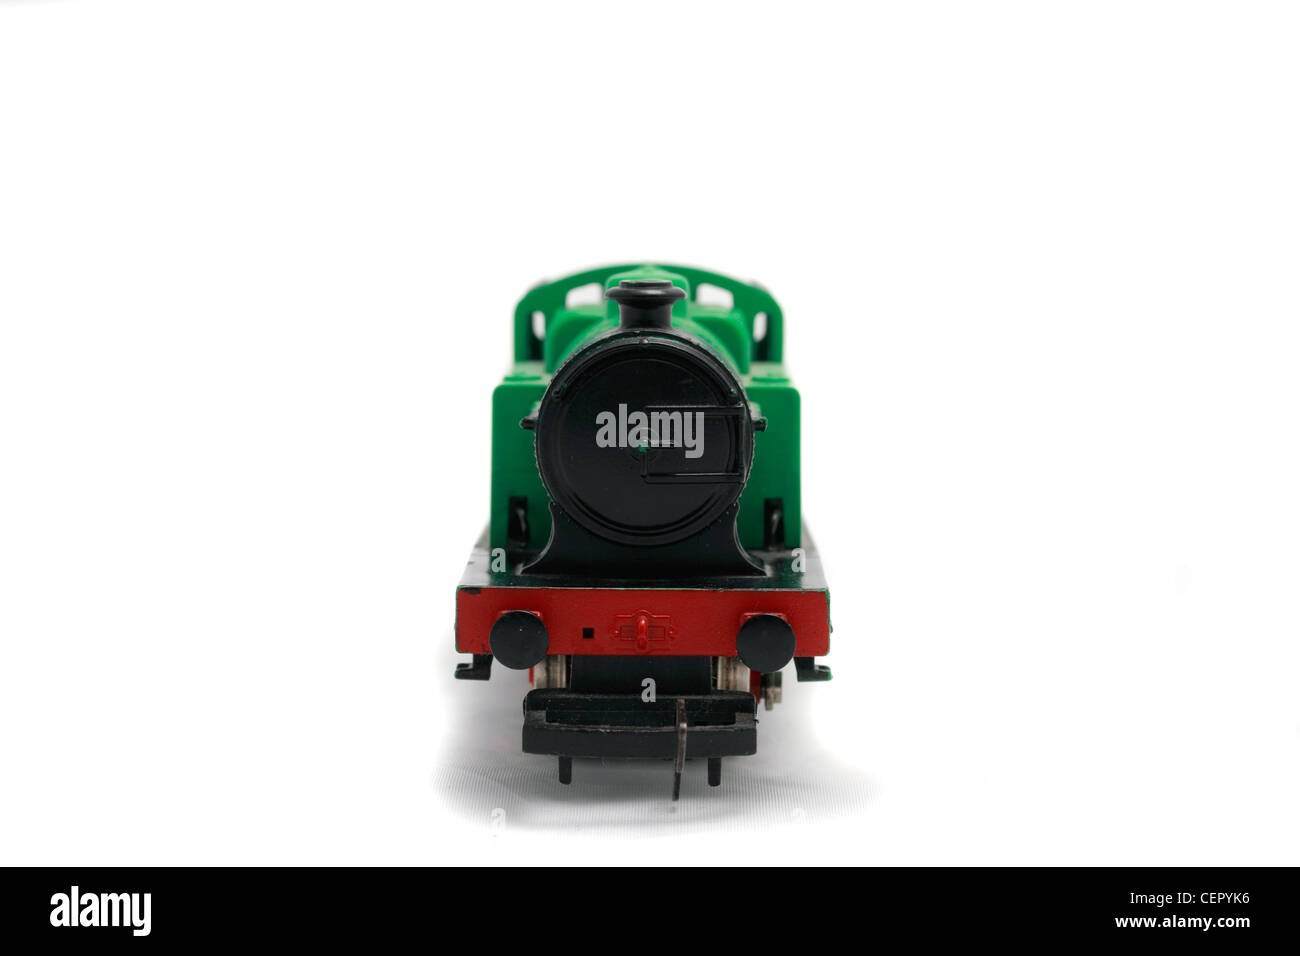 Los ferrocarriles británicos 0-4-0 shunter vapor, 00 medidor eléctrico Hornby ferrocarriles tren modelo Foto de stock